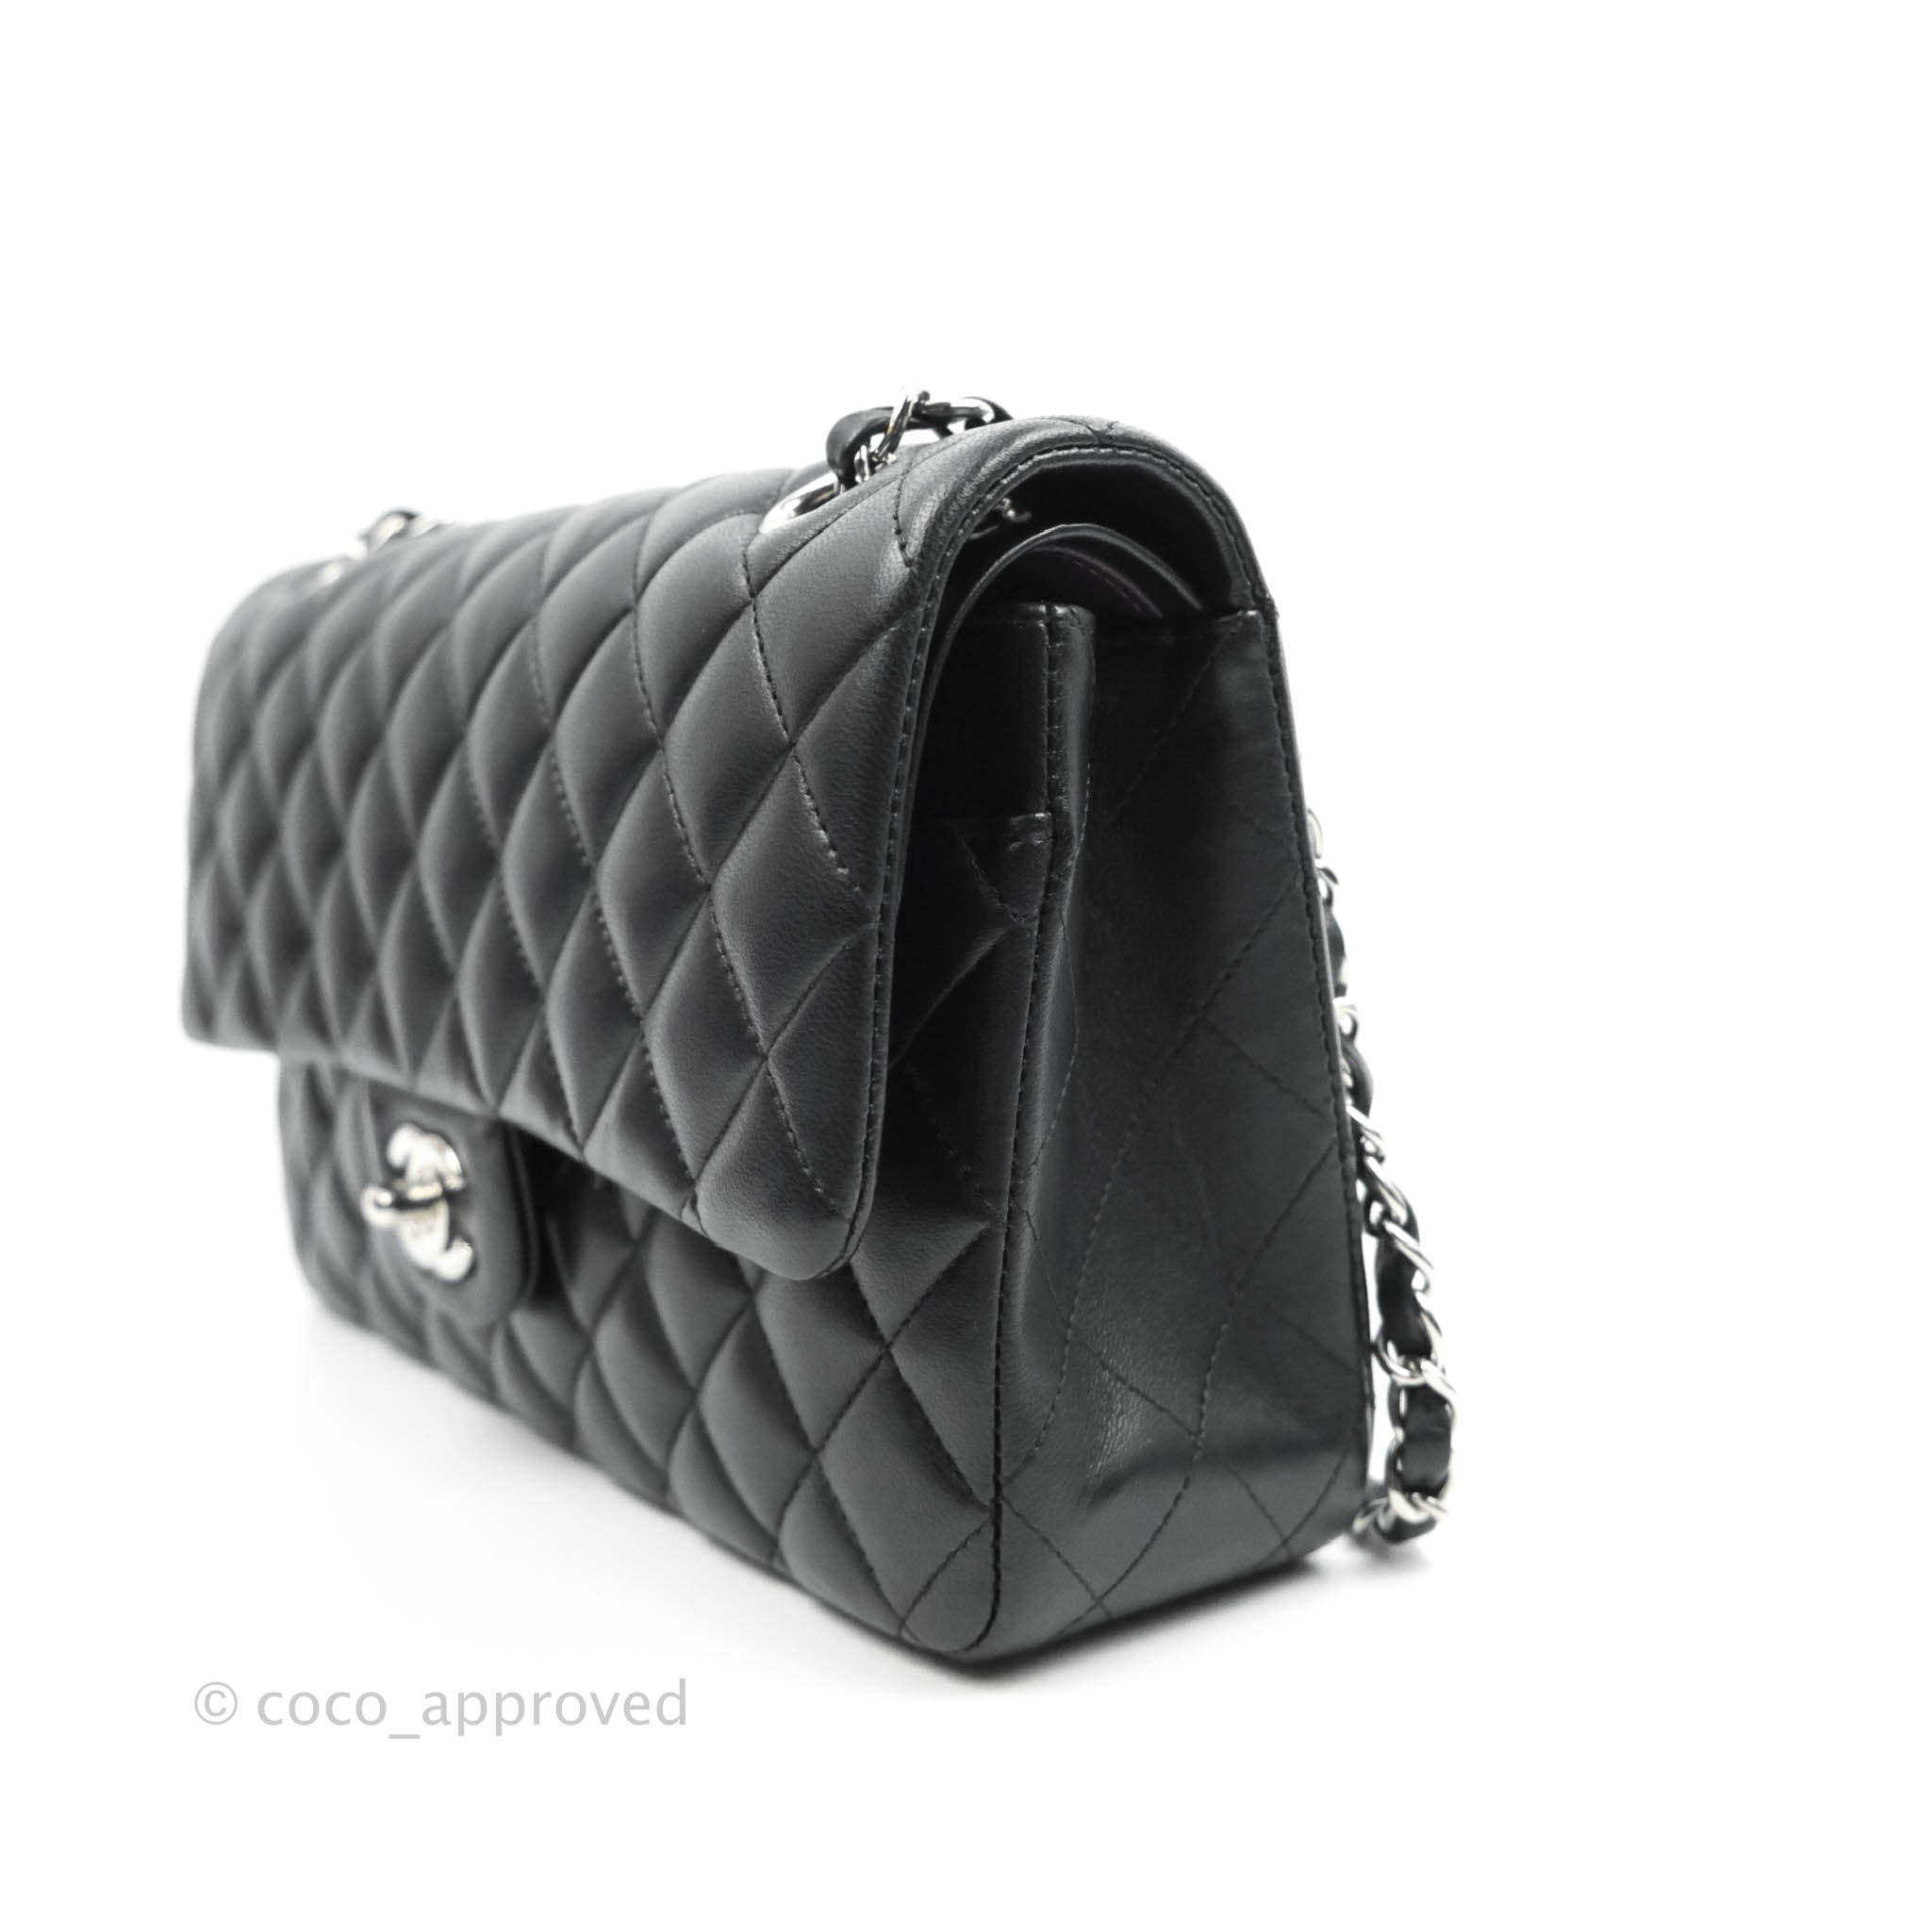 Chanel Classic Double Flap Bag, Black Lambskin, Medium